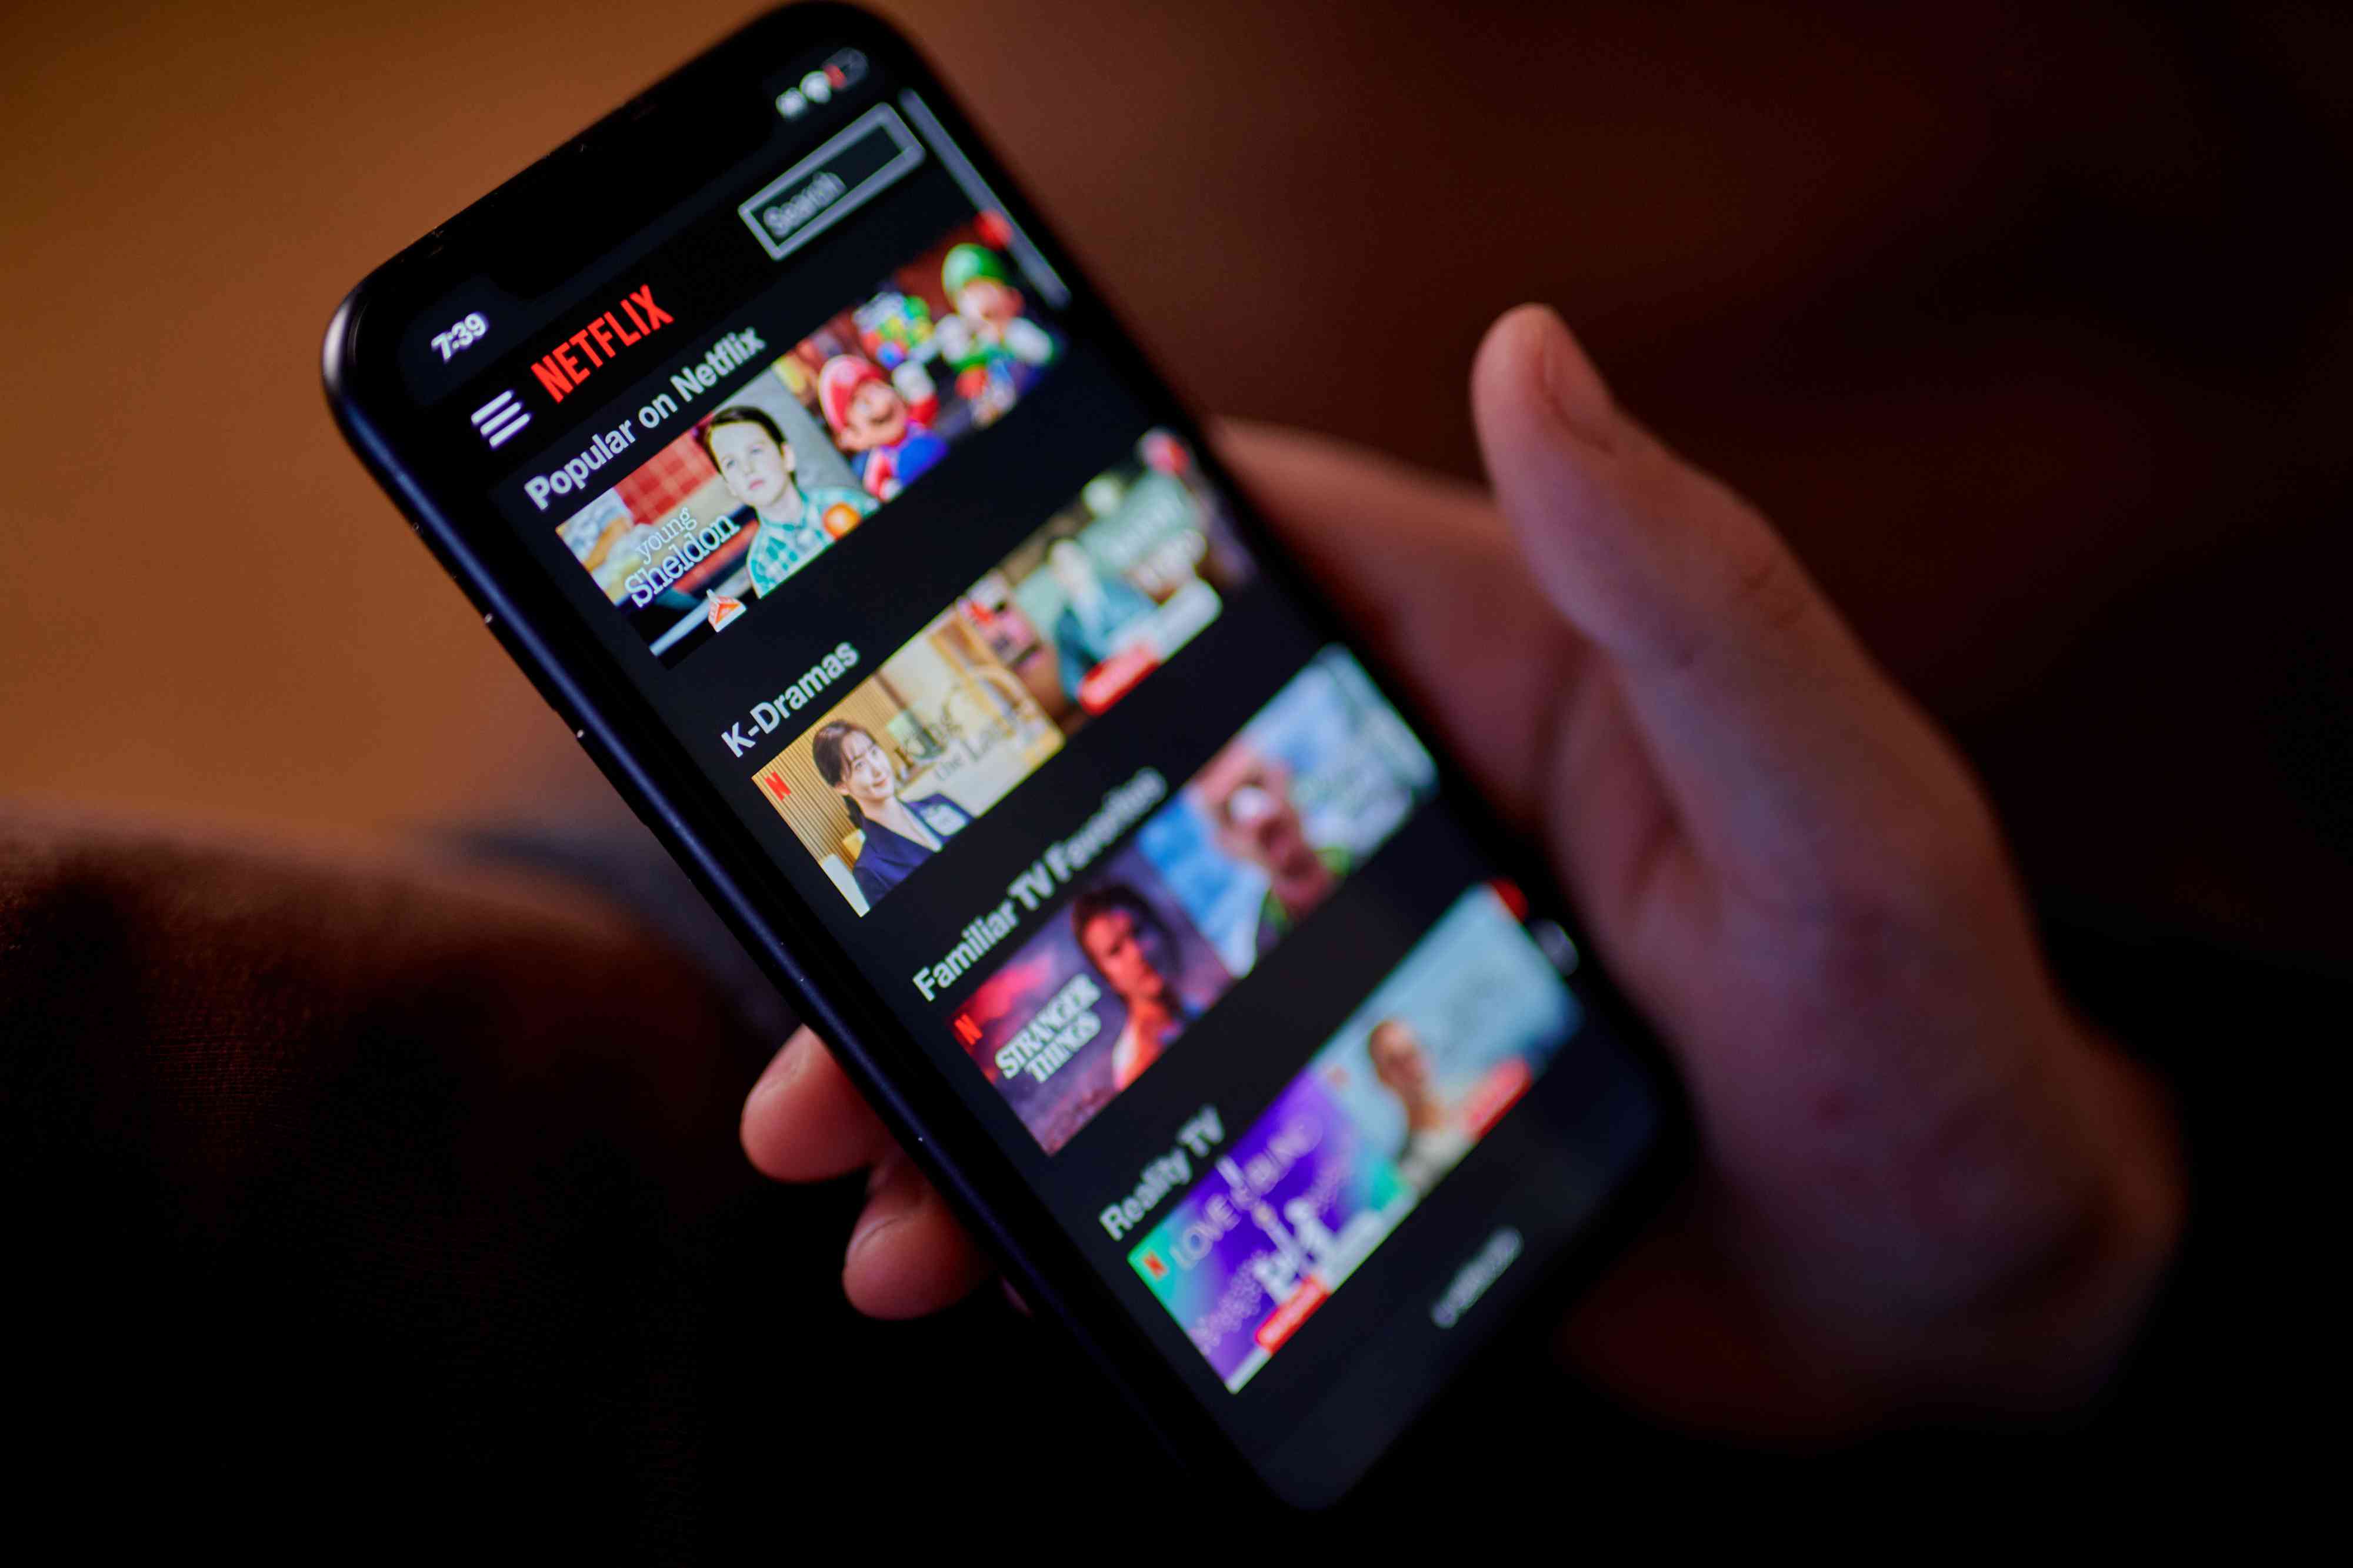 Netflix app on a smartphone